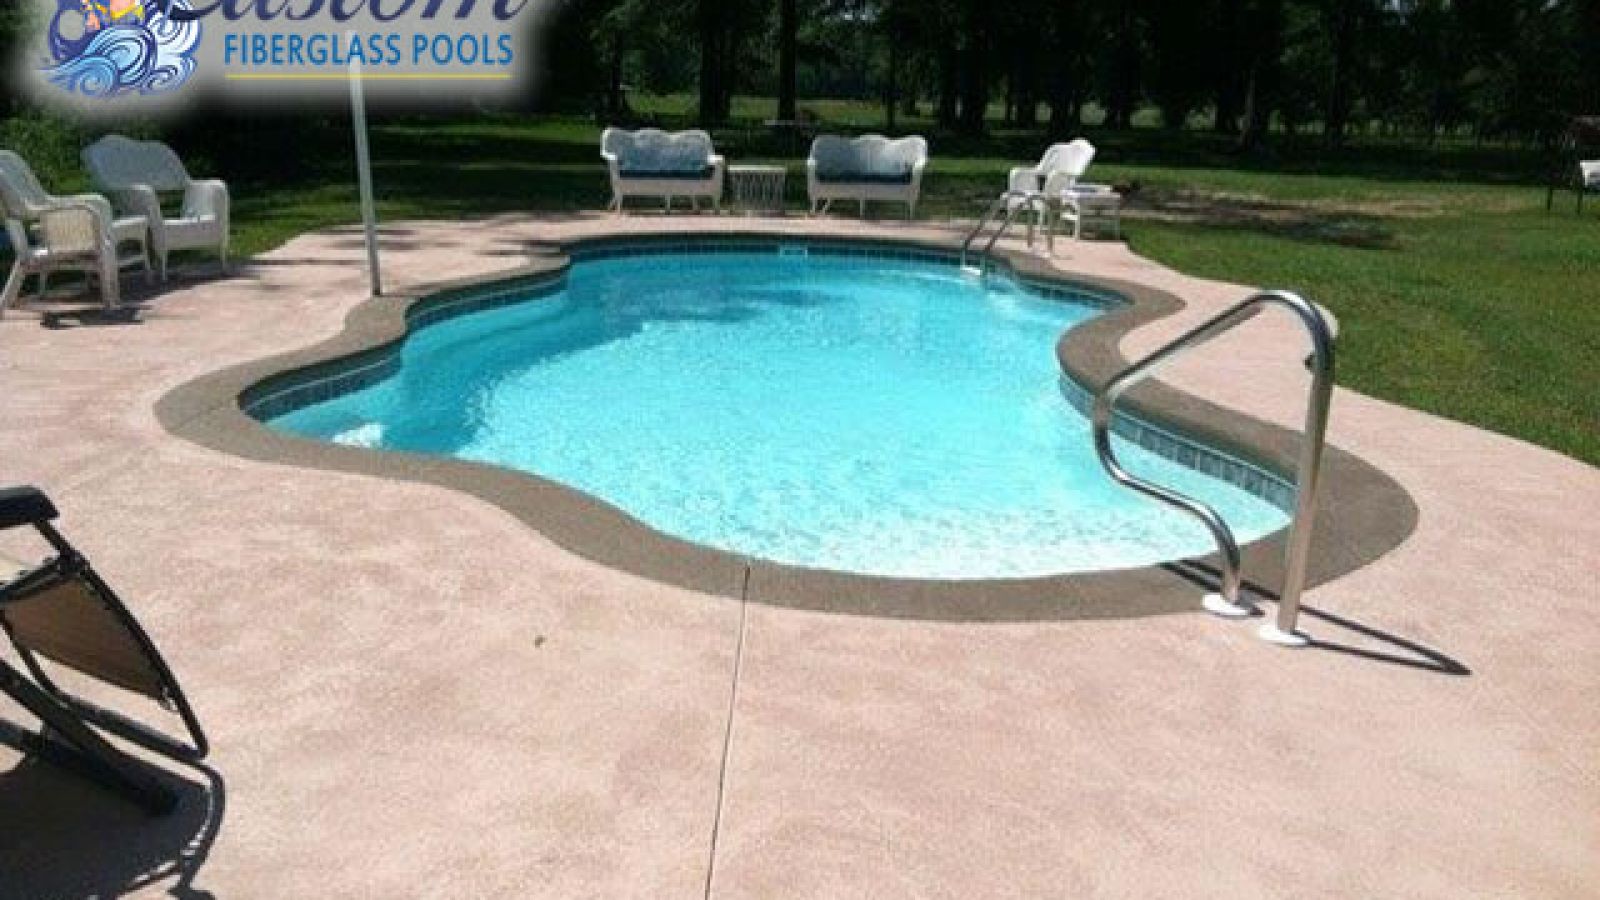 Laguna Fiberglass Pool enhancing outdoor gathering spaces at AR Stoneworks, Clarksville TN